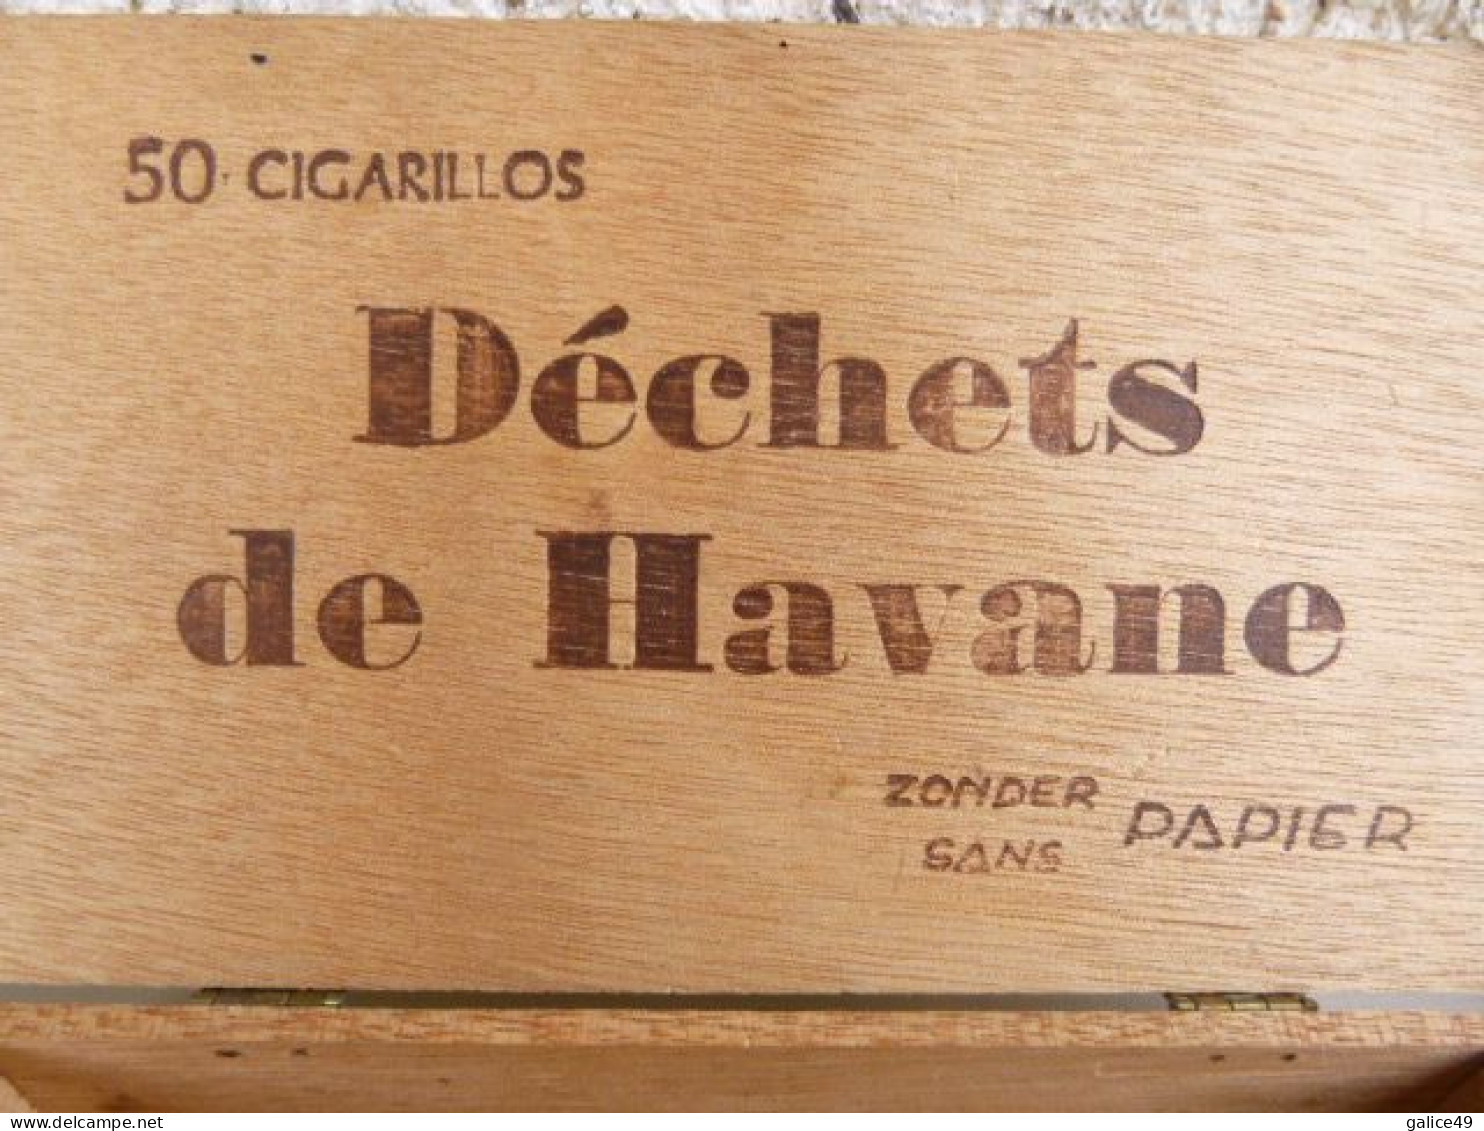 Boite En Bois Vide Déchets De Havane - Otros & Sin Clasificación